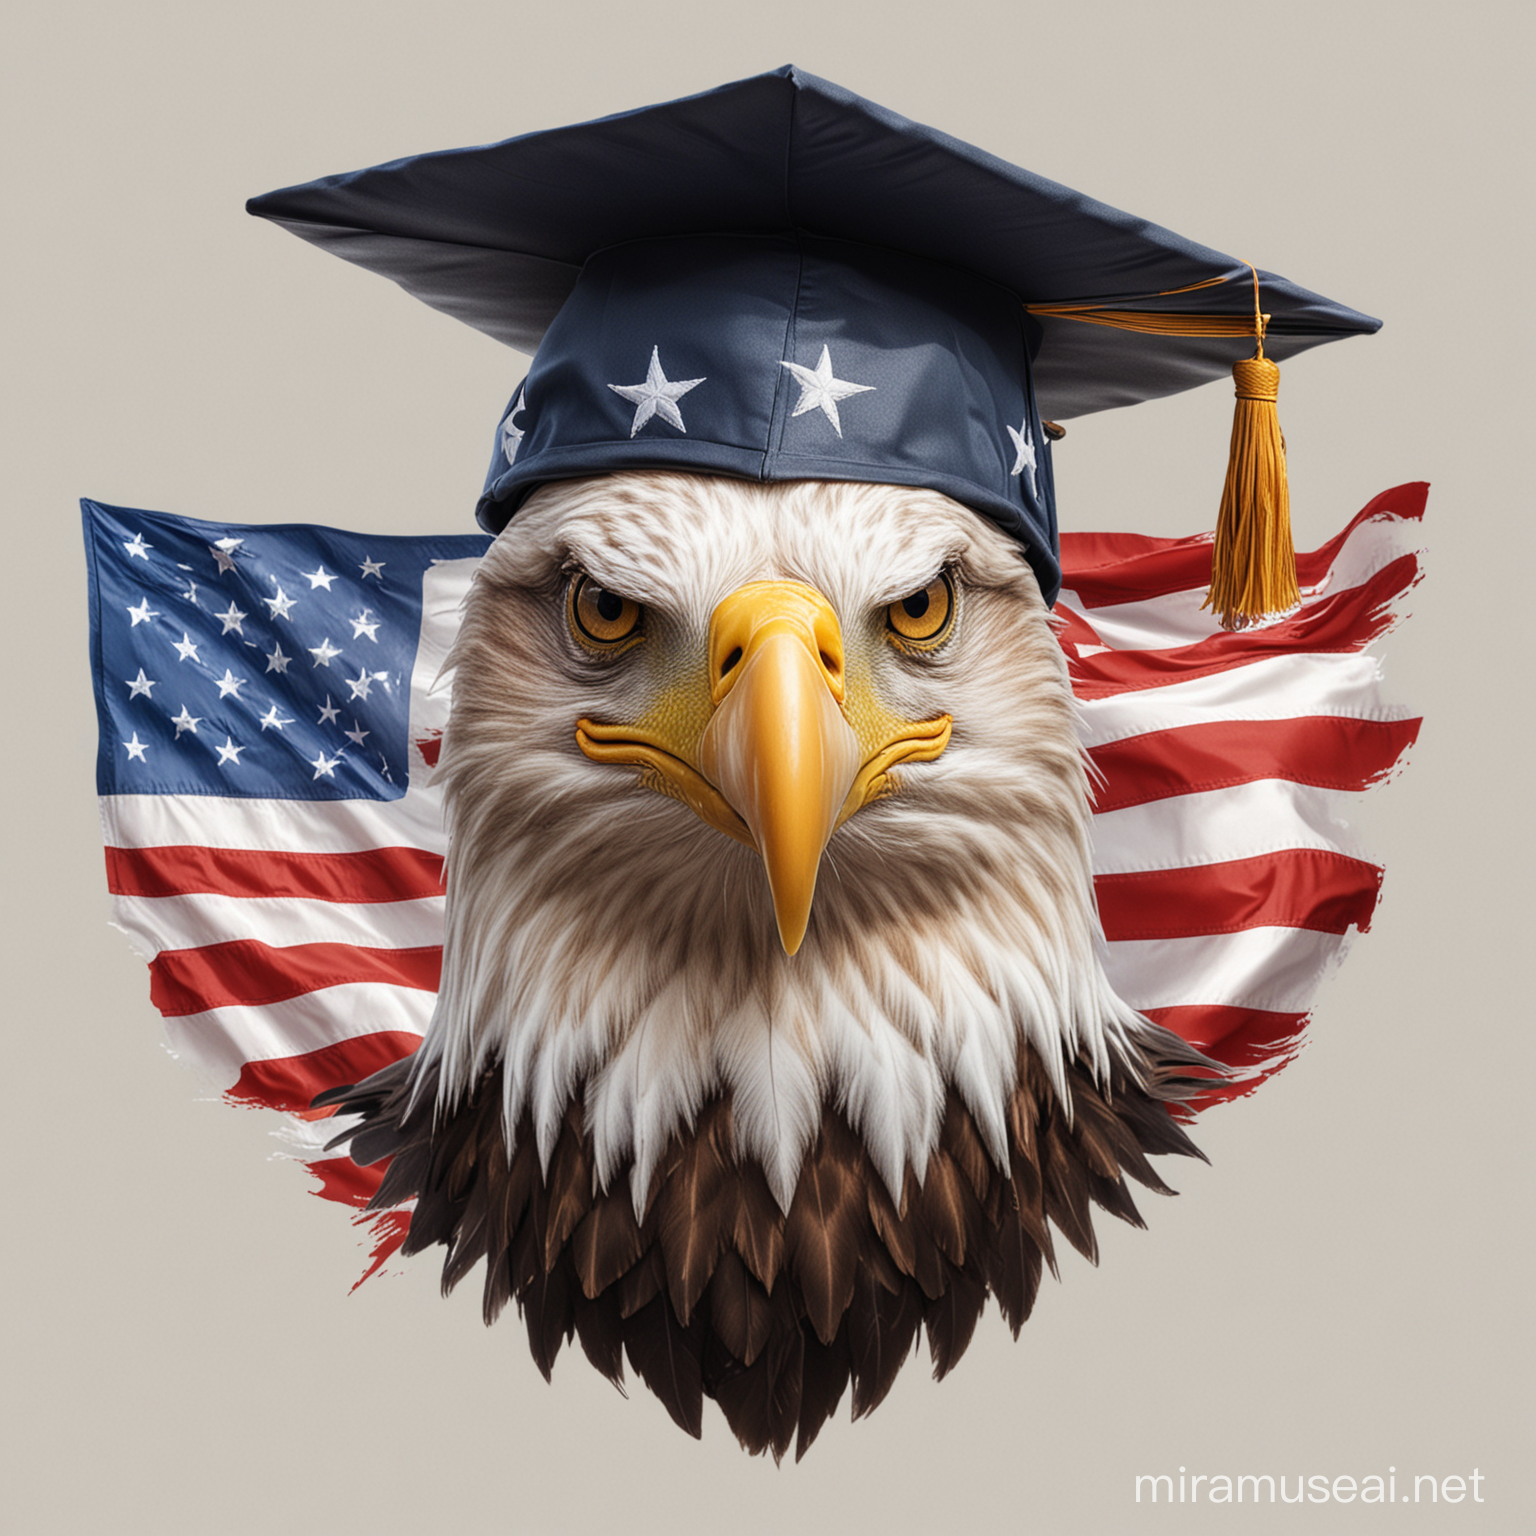 American Eagle Graduate with Patriotic Flair